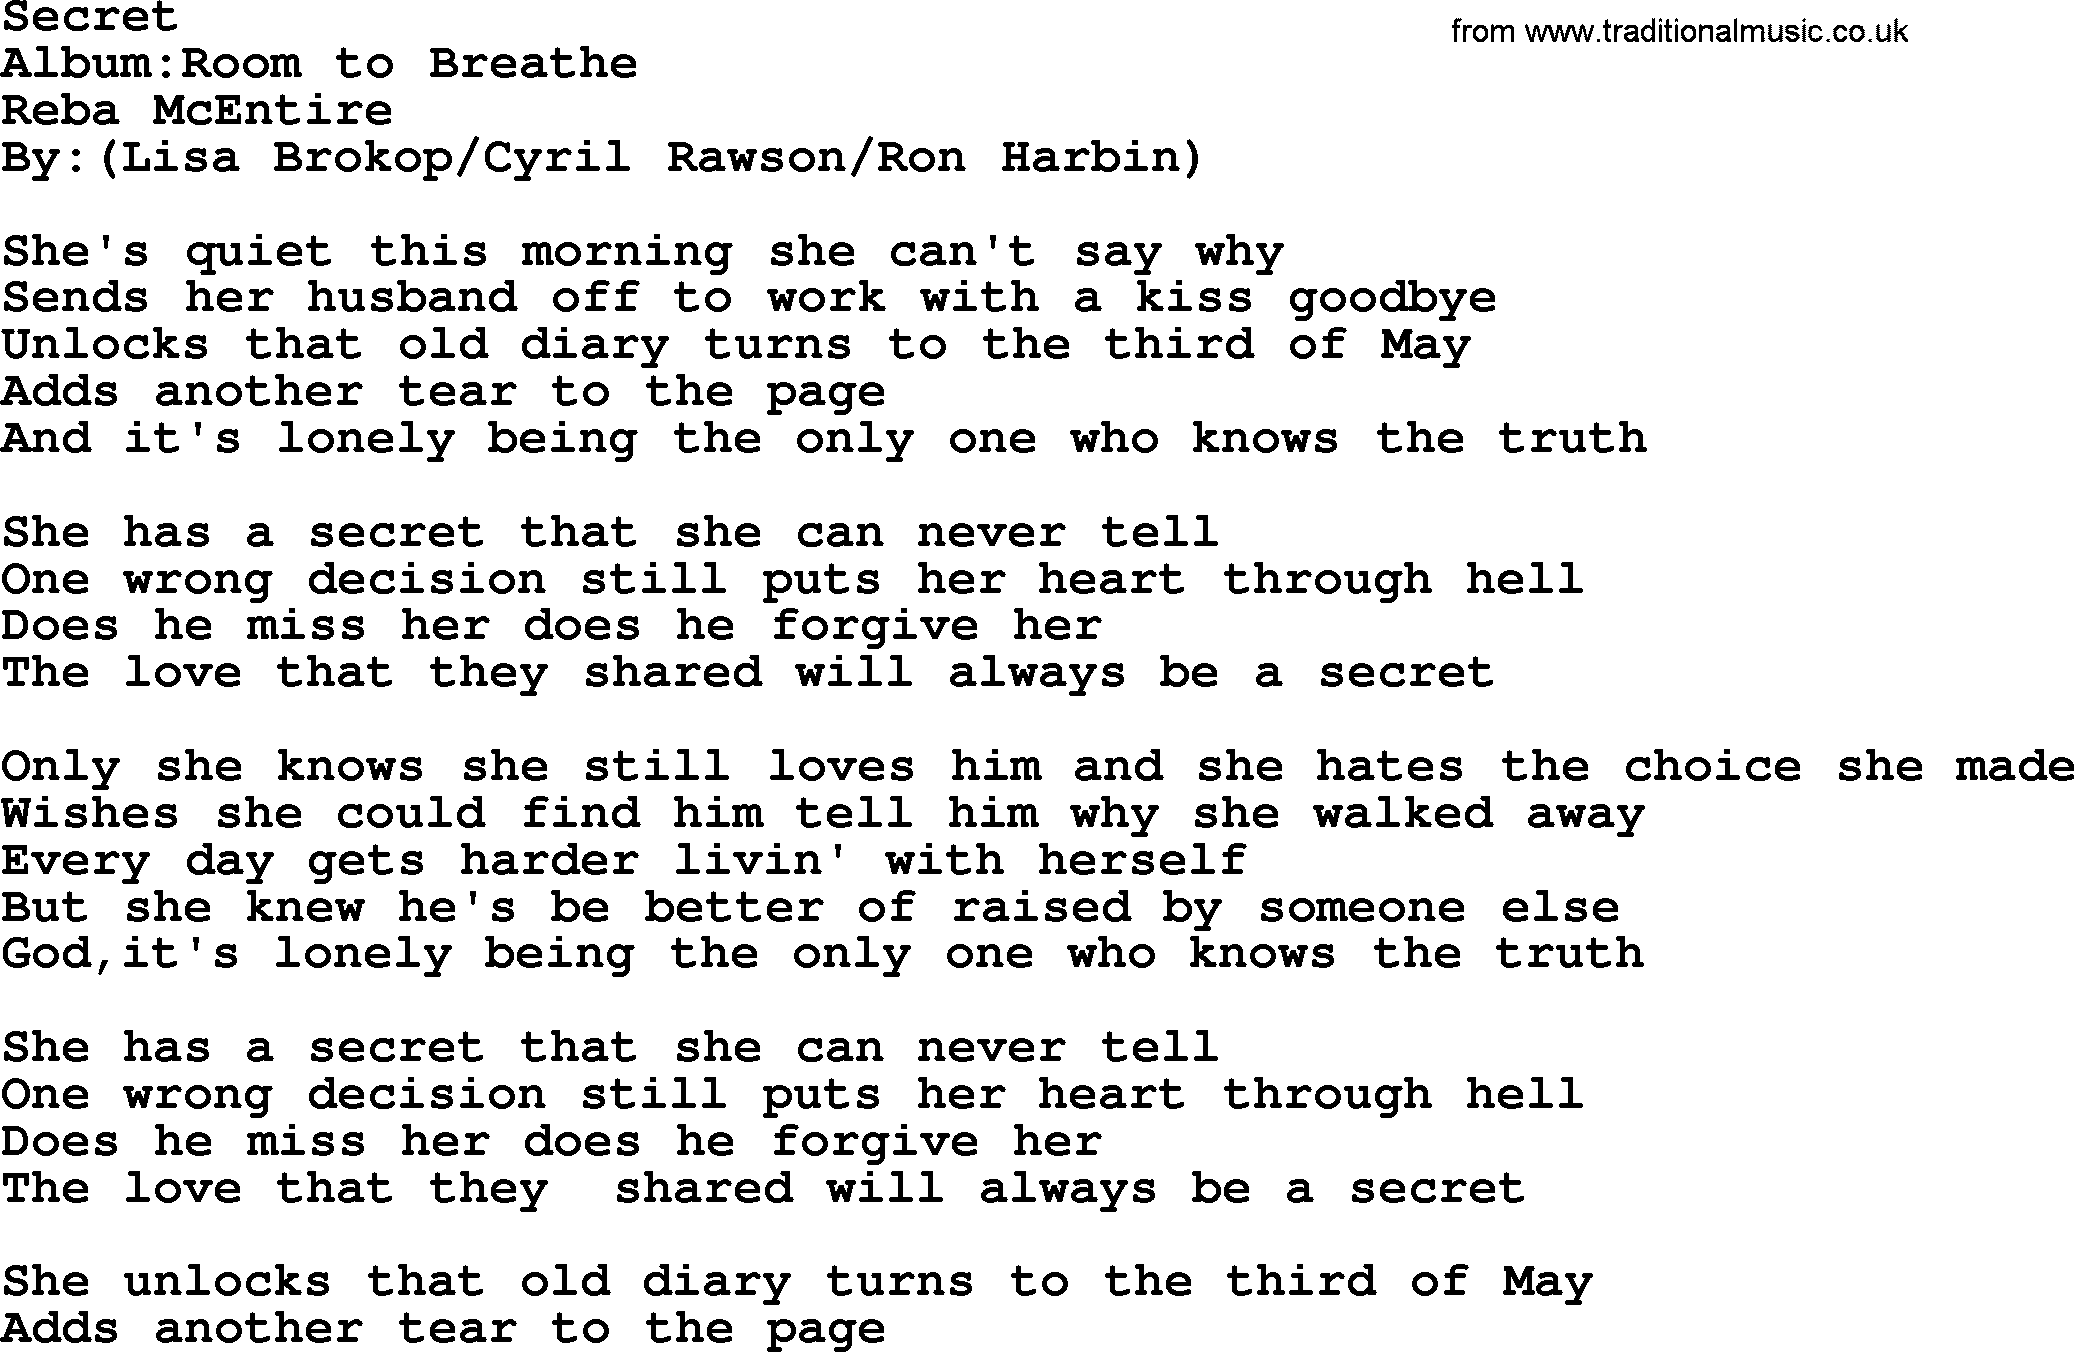 Reba McEntire song: Secret lyrics